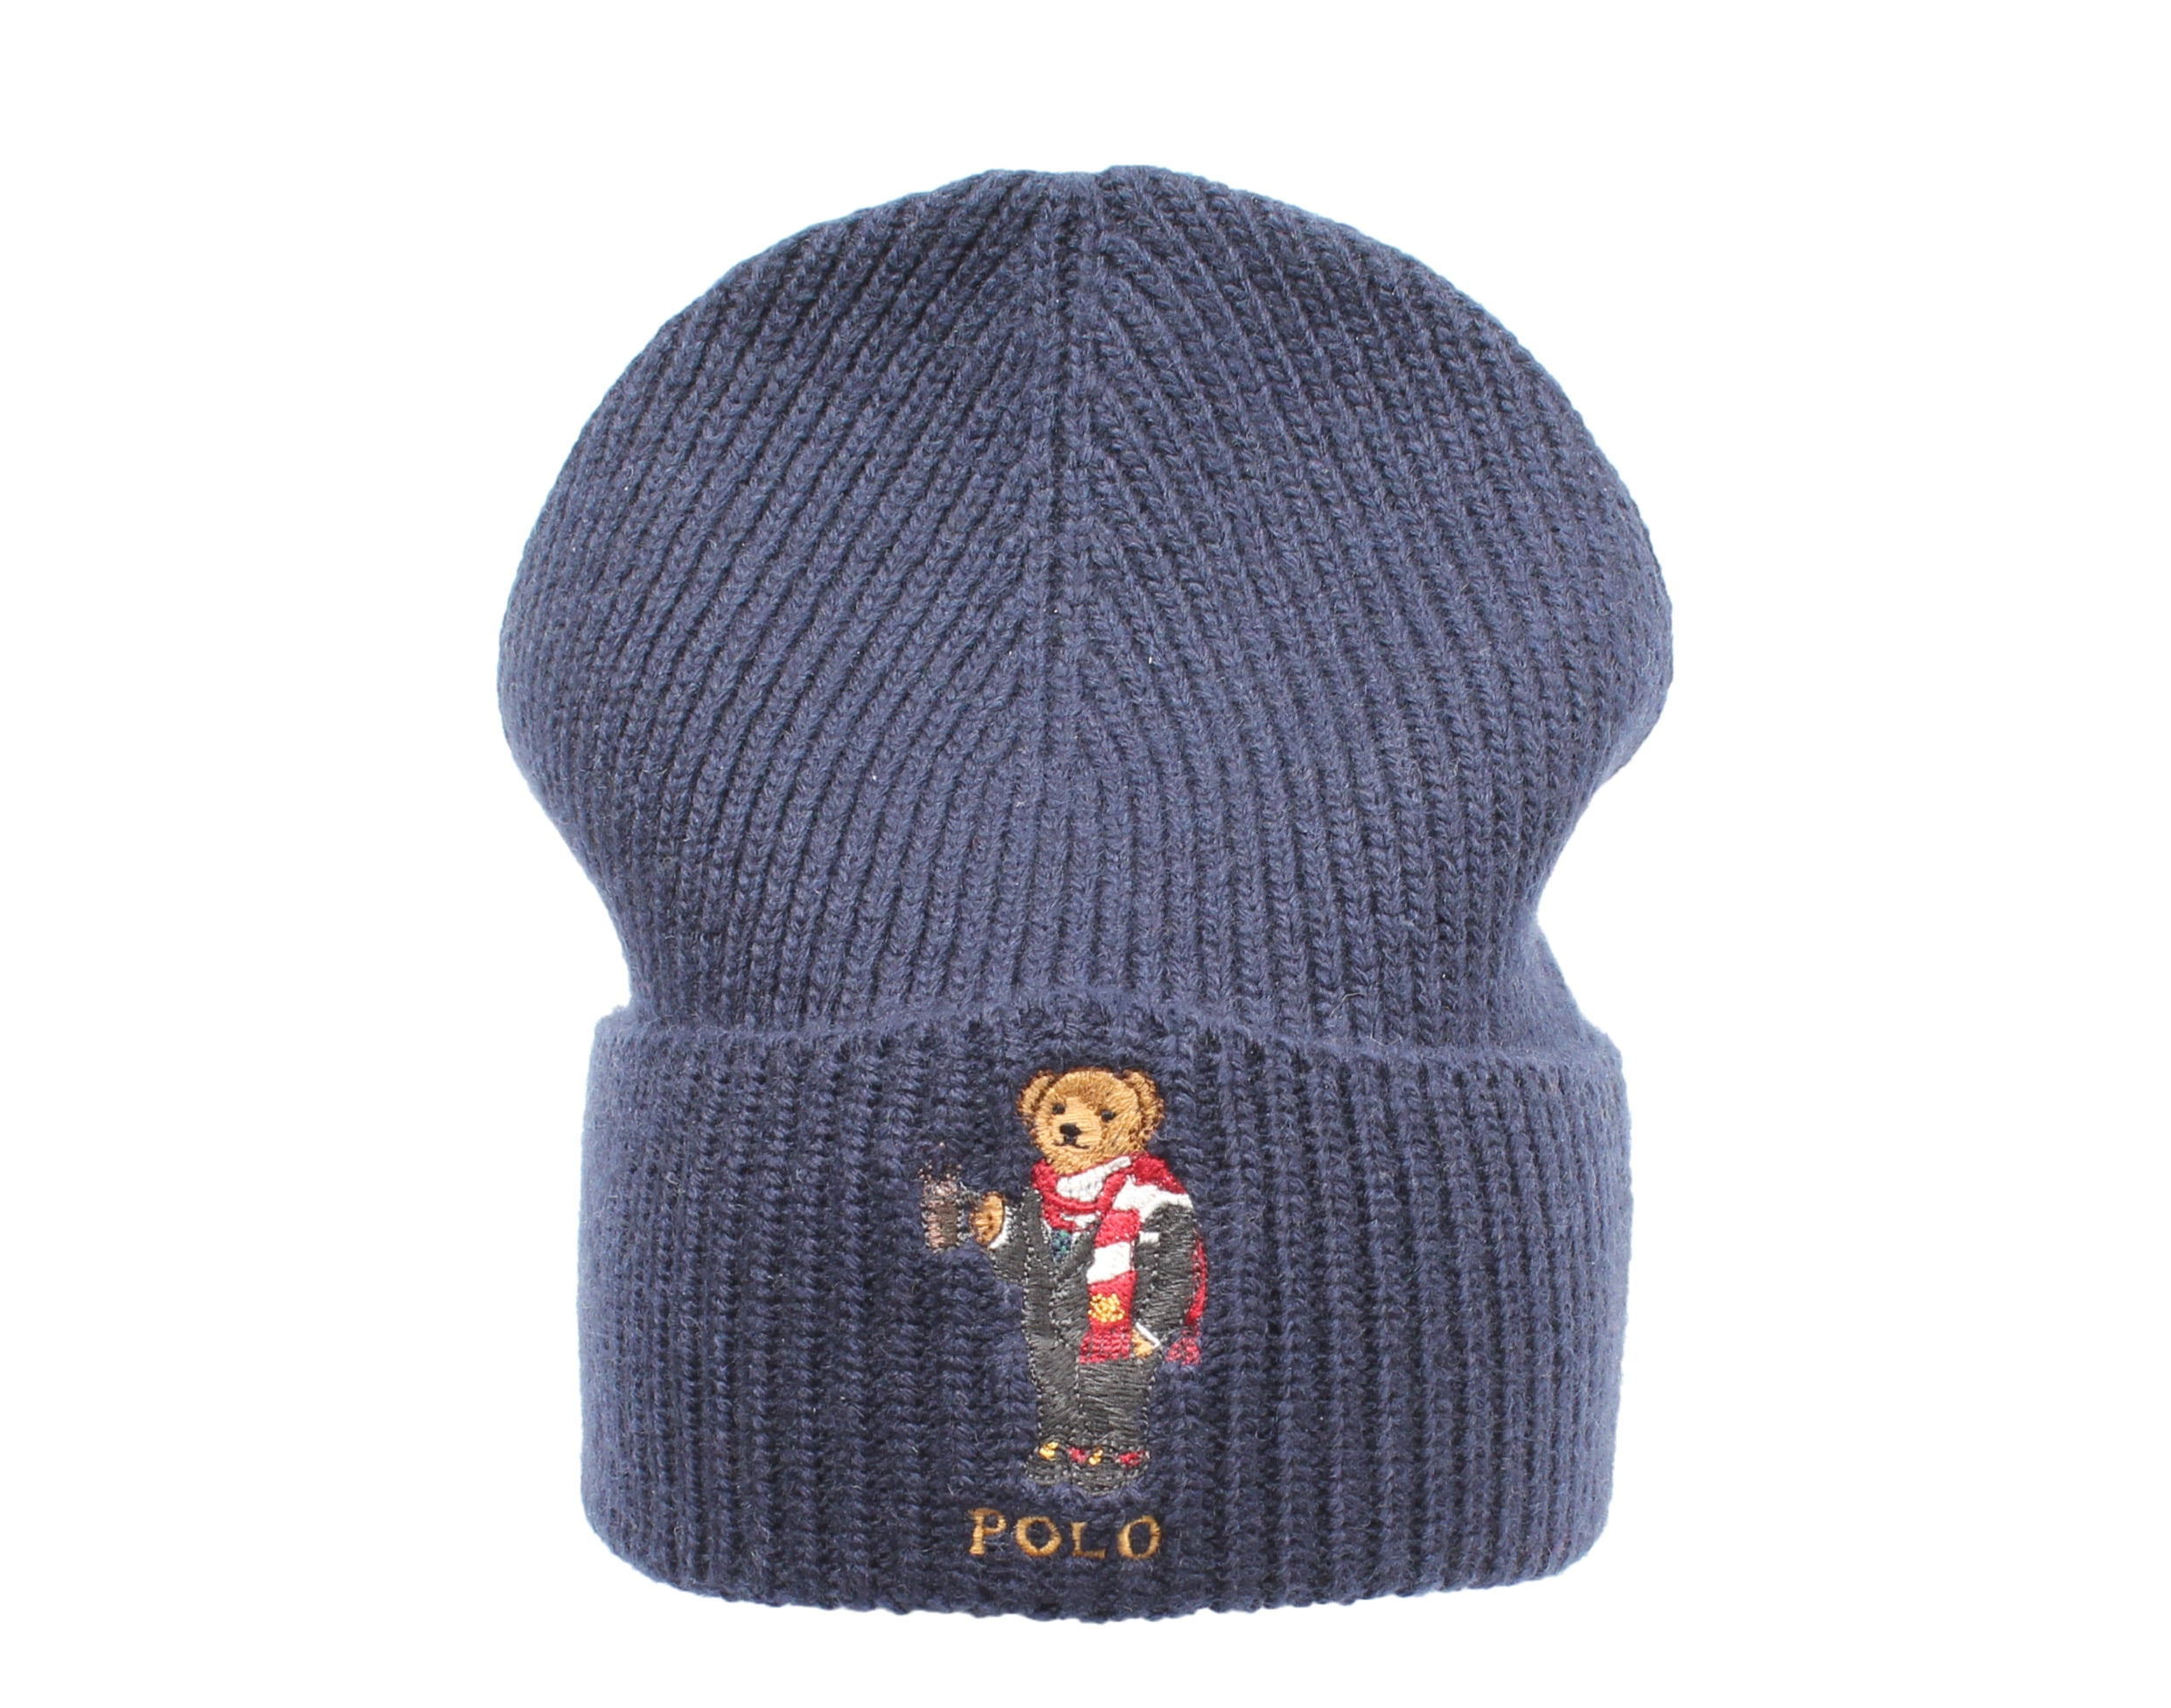 polo knit hats